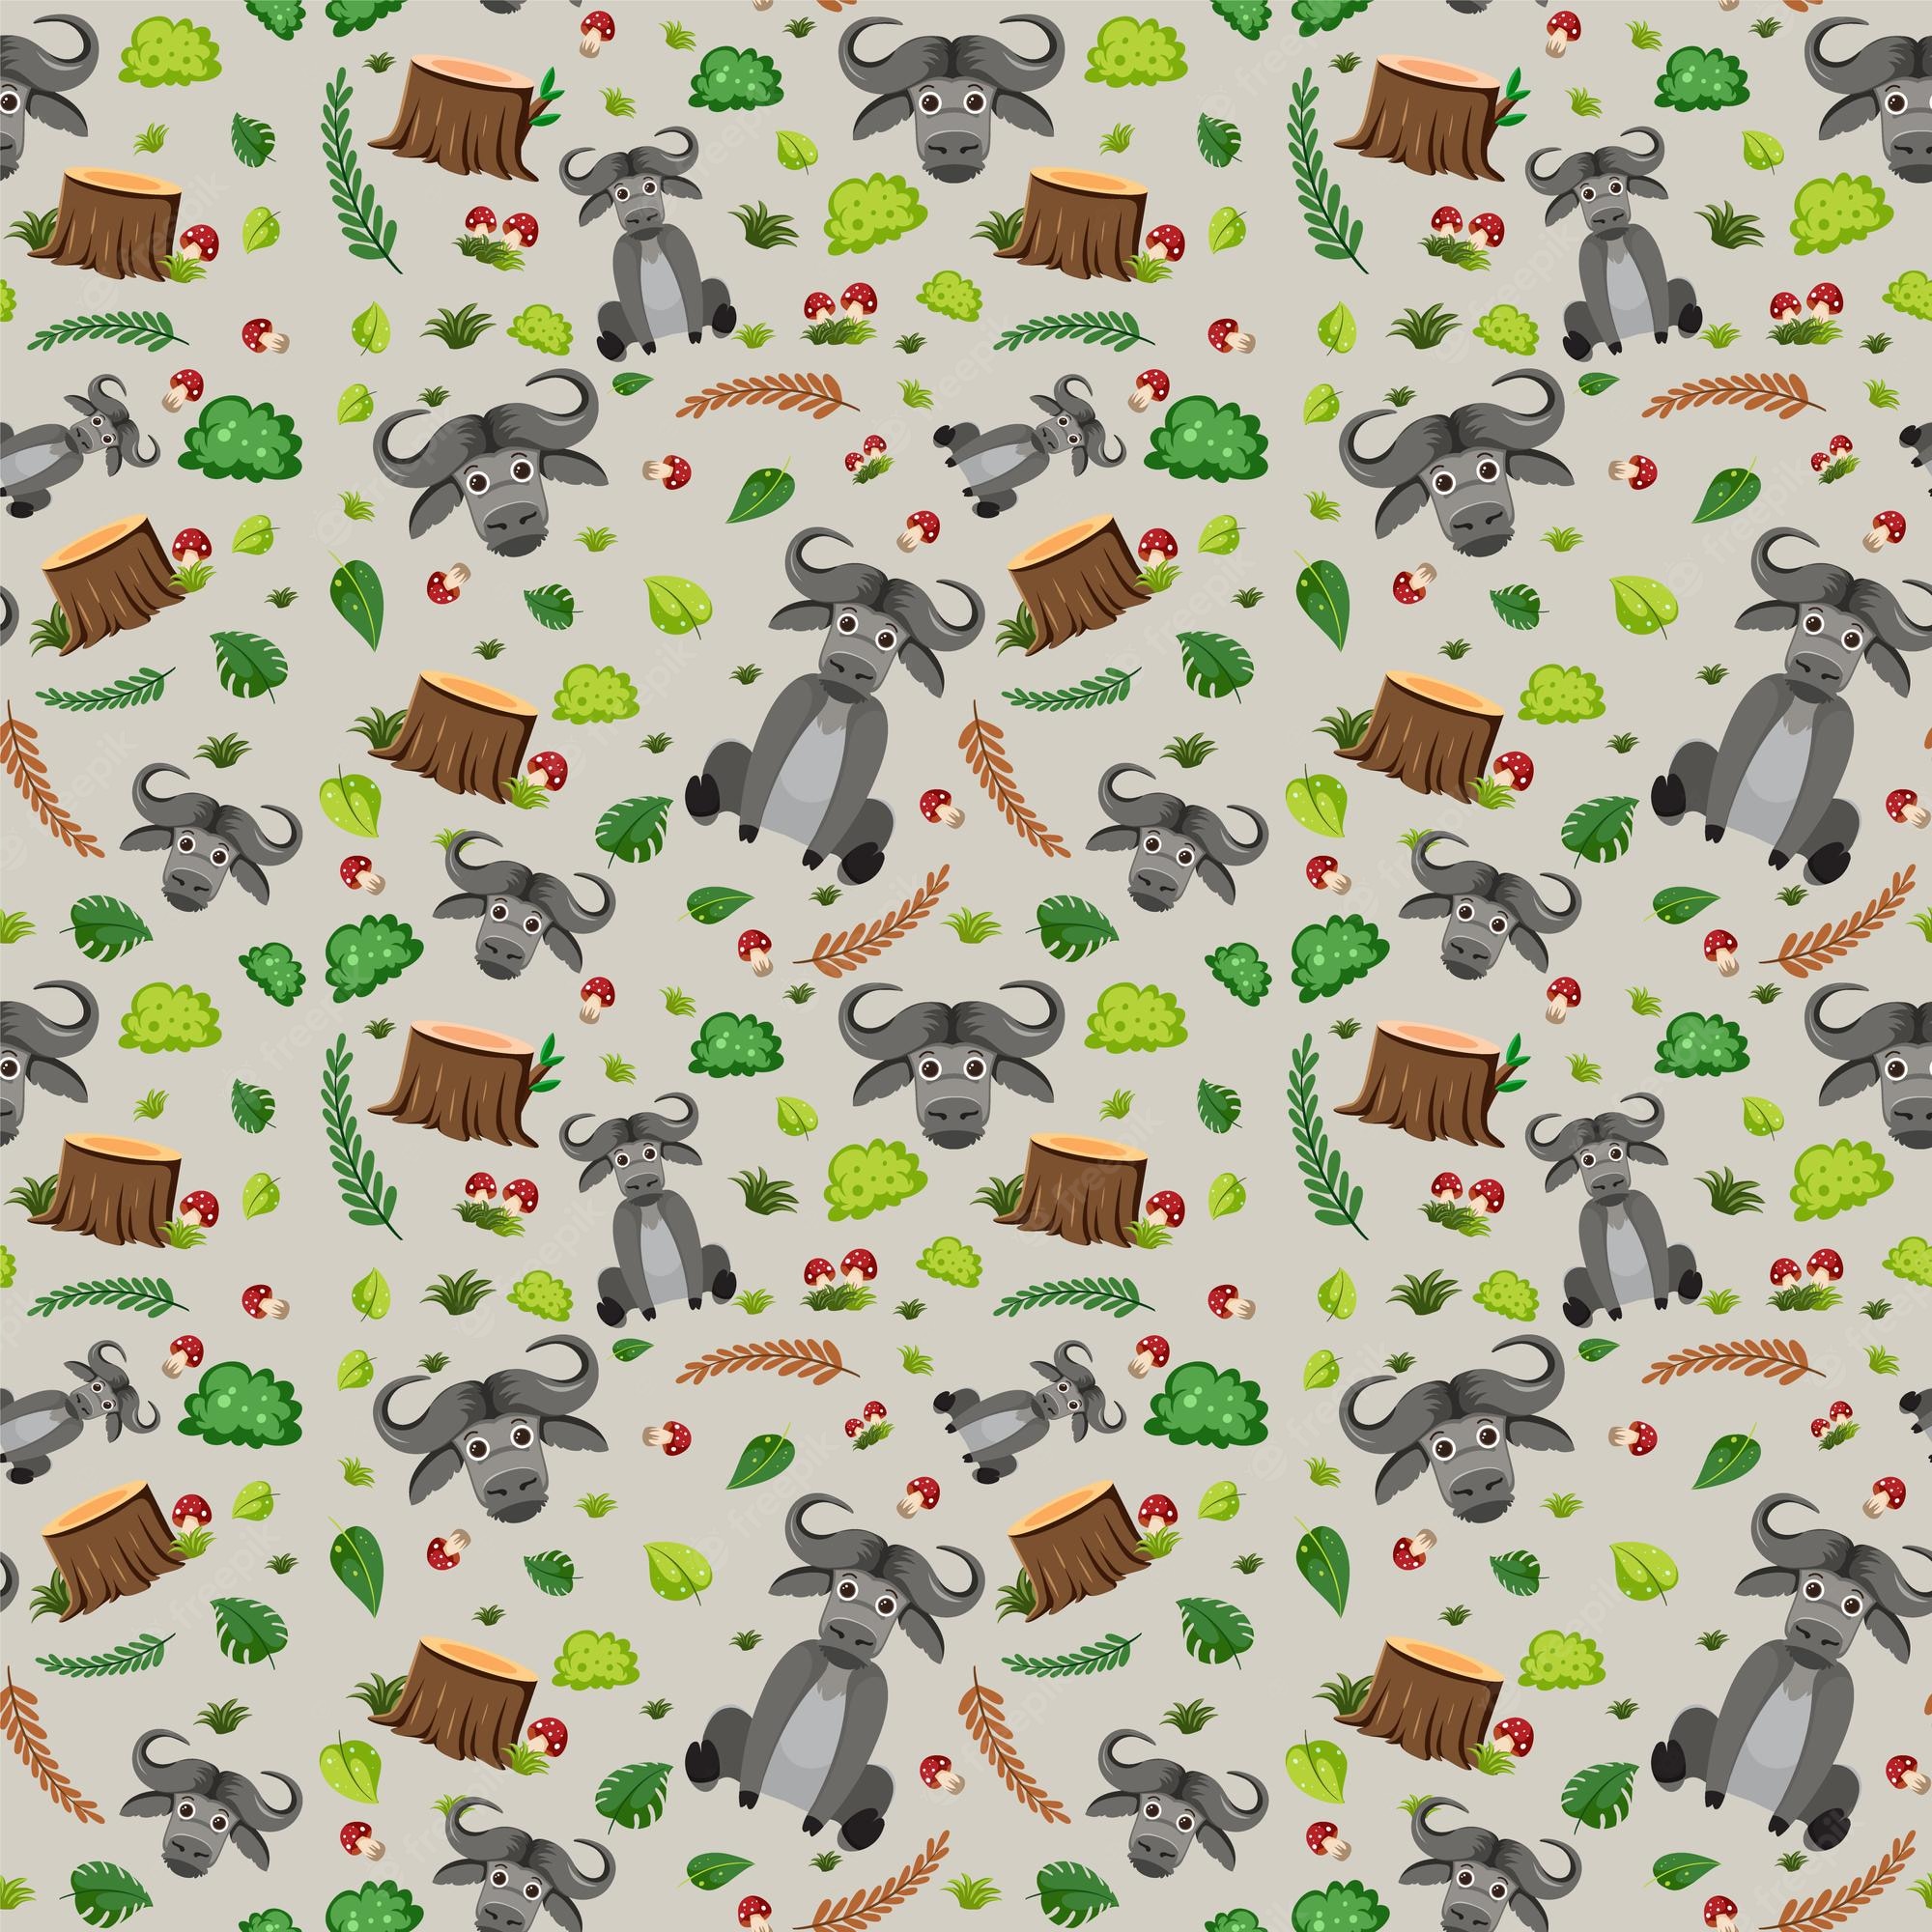 Sloth Wallpaper Image